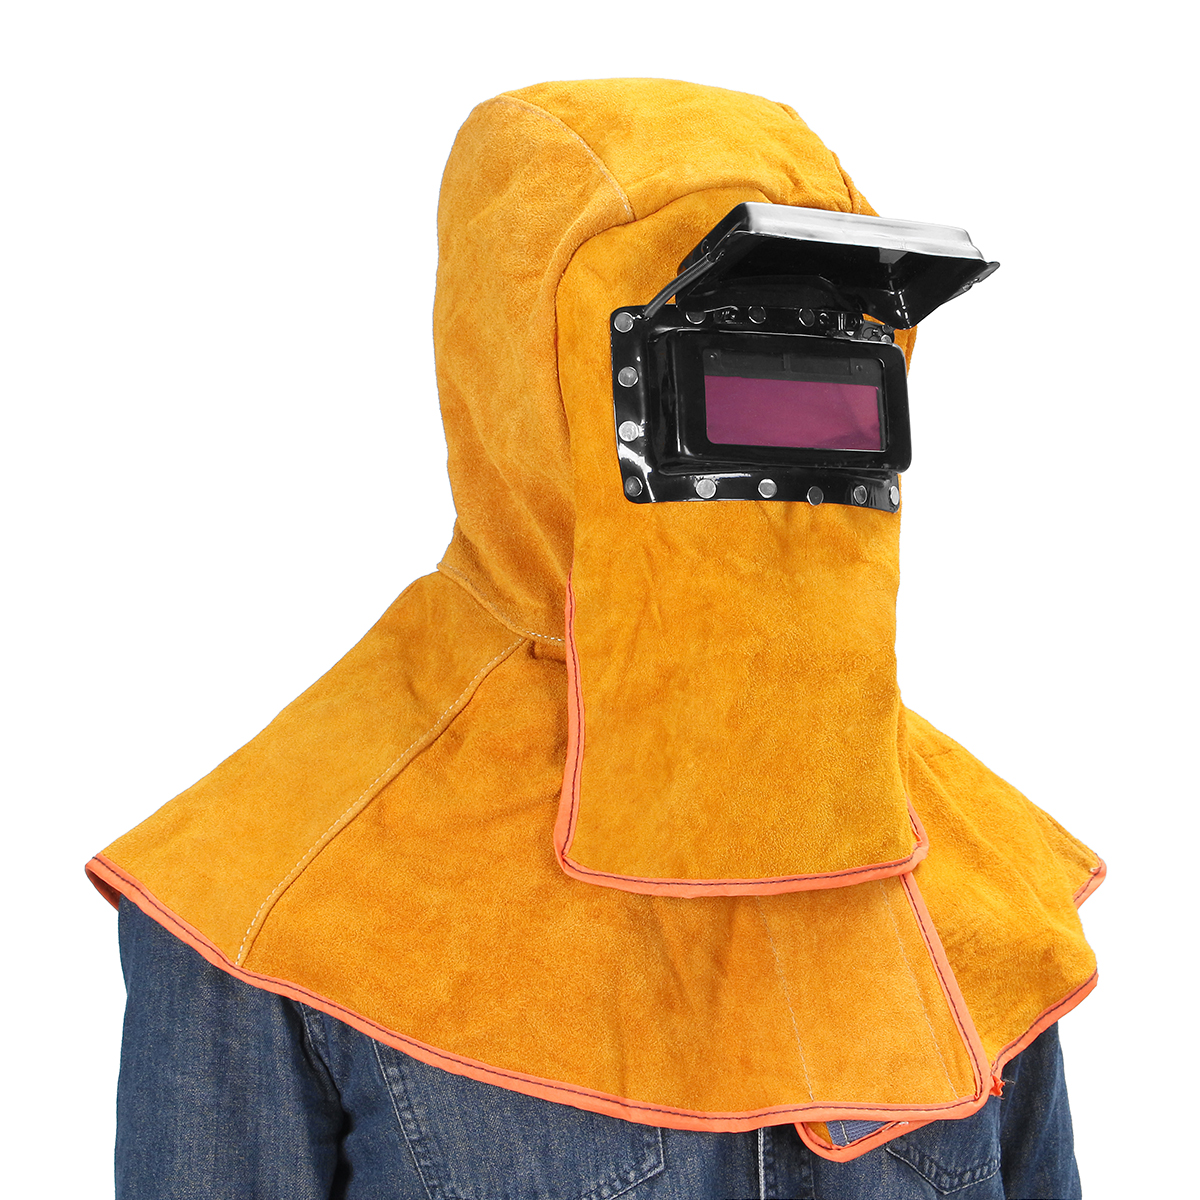 Leather-Solar-Auto-Darkening-Filter-Lens-Protect-Welding-Neck-Mask-Helmet-1339964-4